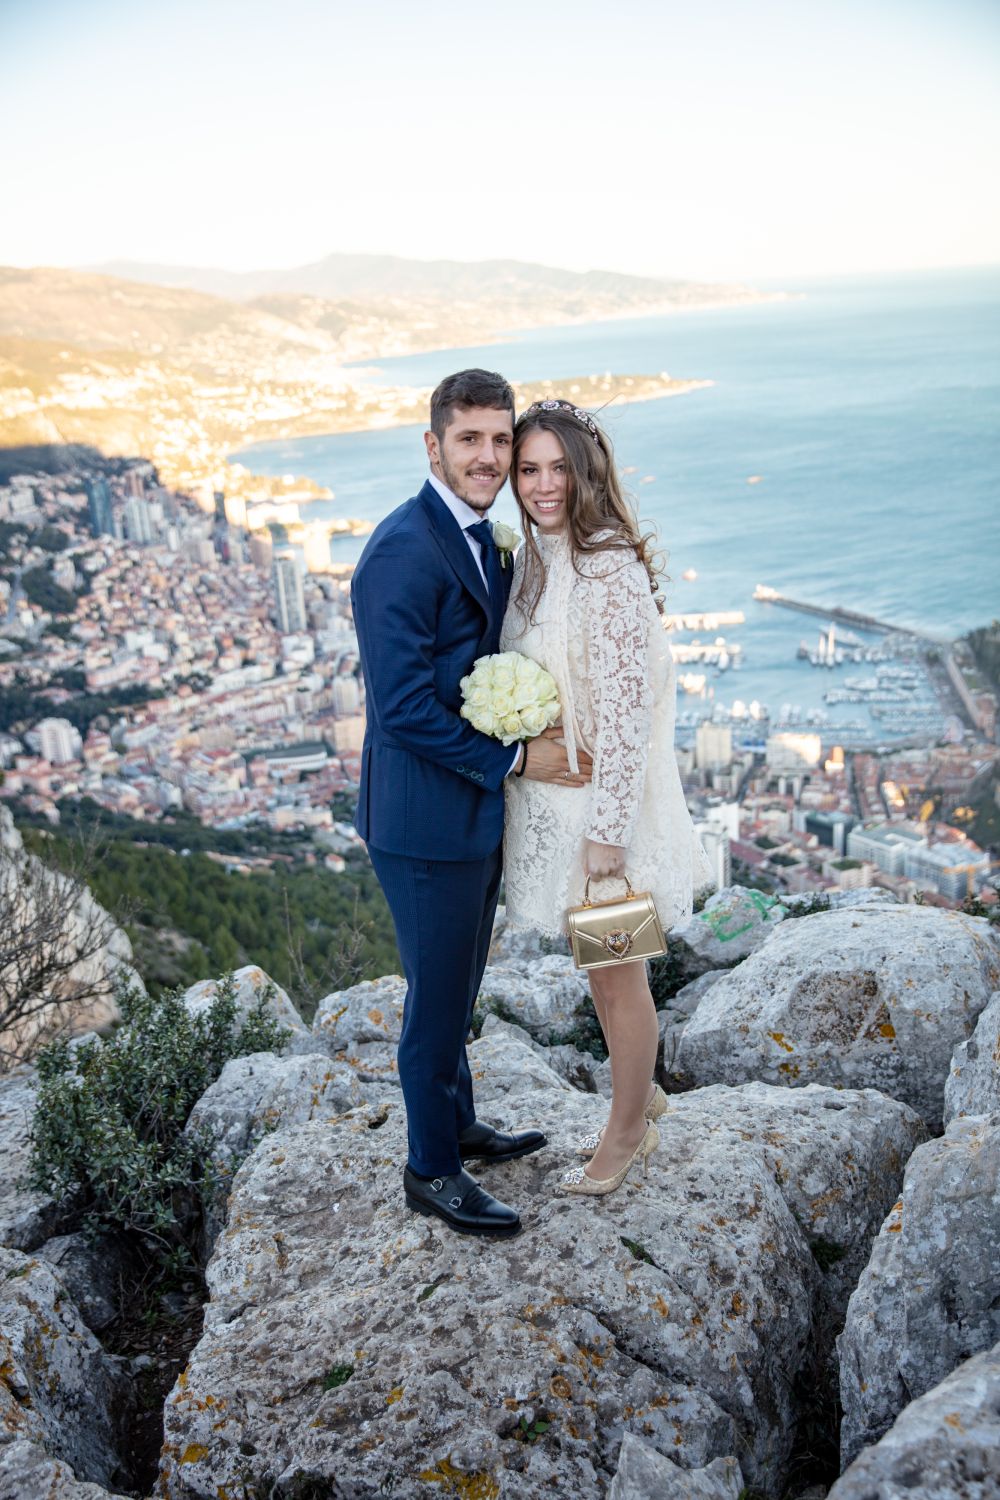 Stevan Jovetić: Bajkovito venčanje u Monaku || Hello magazin